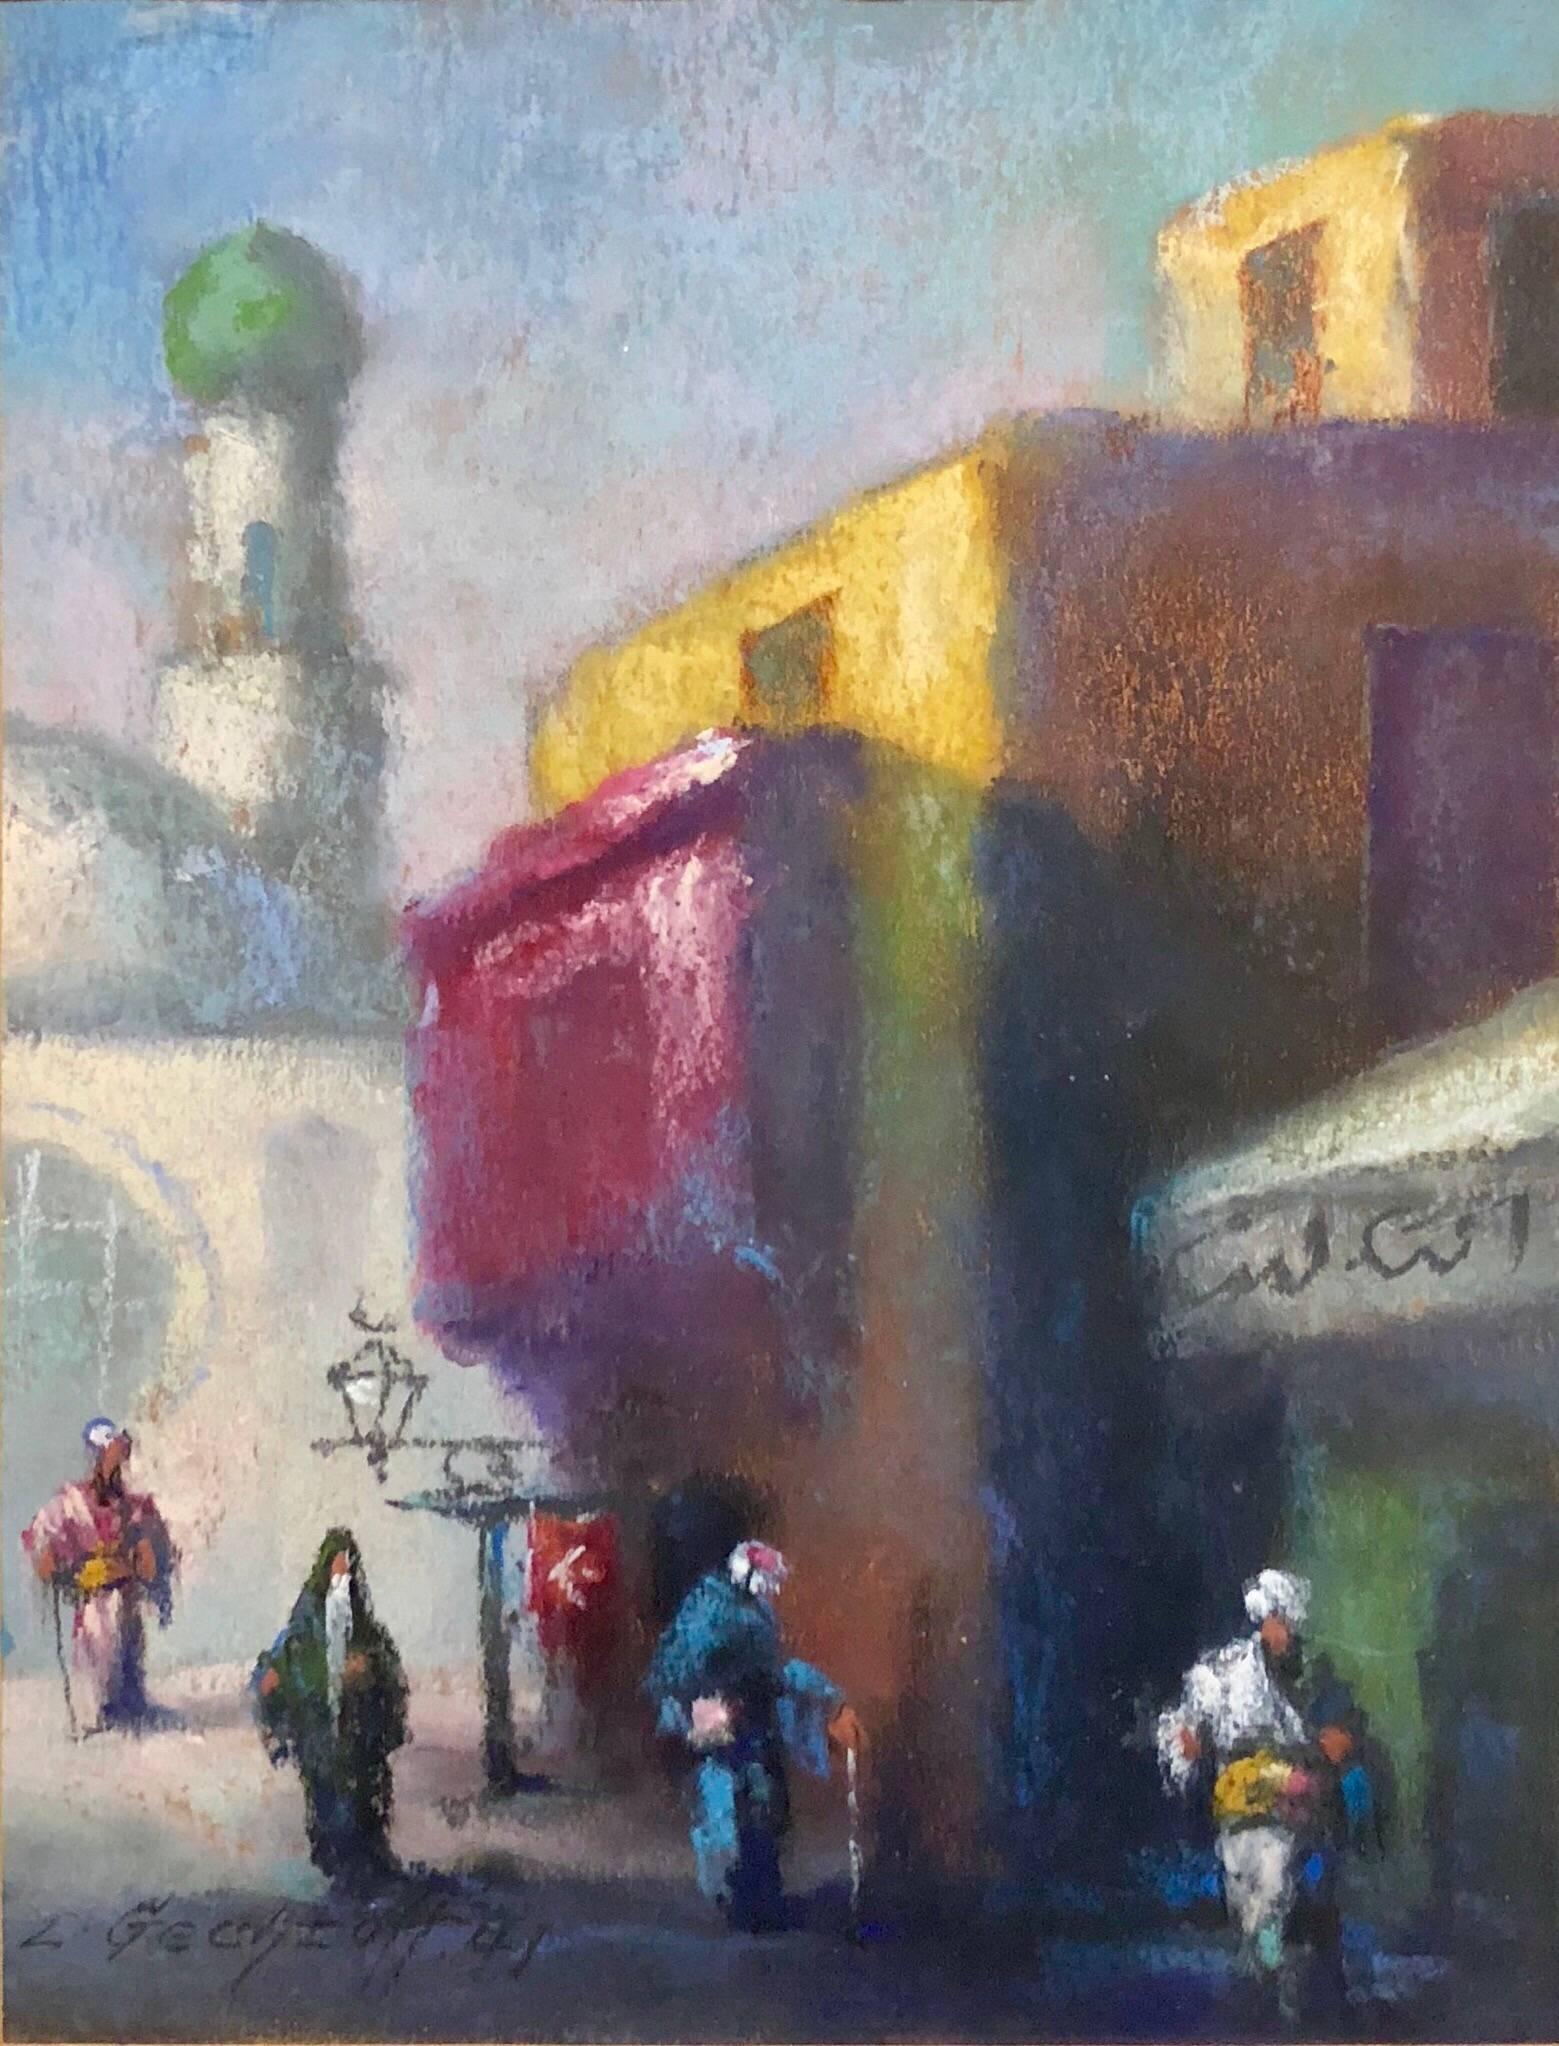 Orientalist Cairo Market Street Scene, Middle Eastern Bazaar